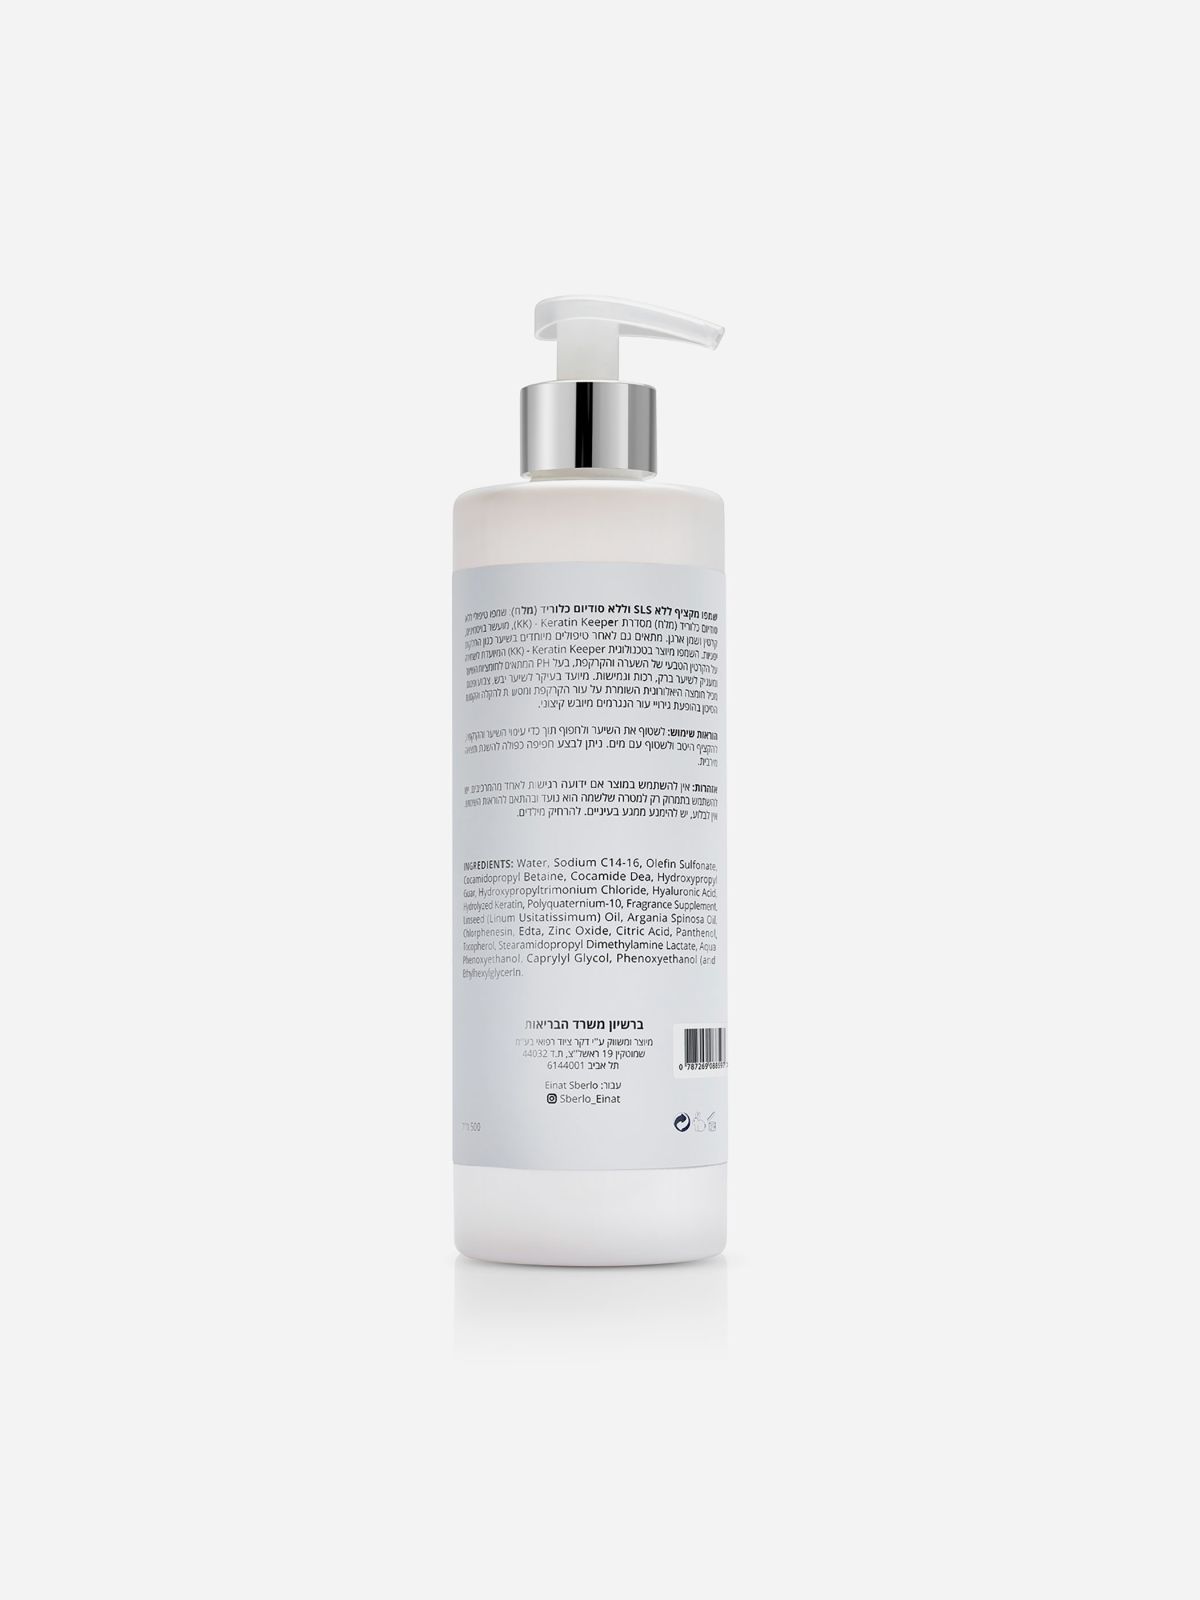  Shampoo SLS and Sodium Chloride free - שמפו טיפולי של I HAIR